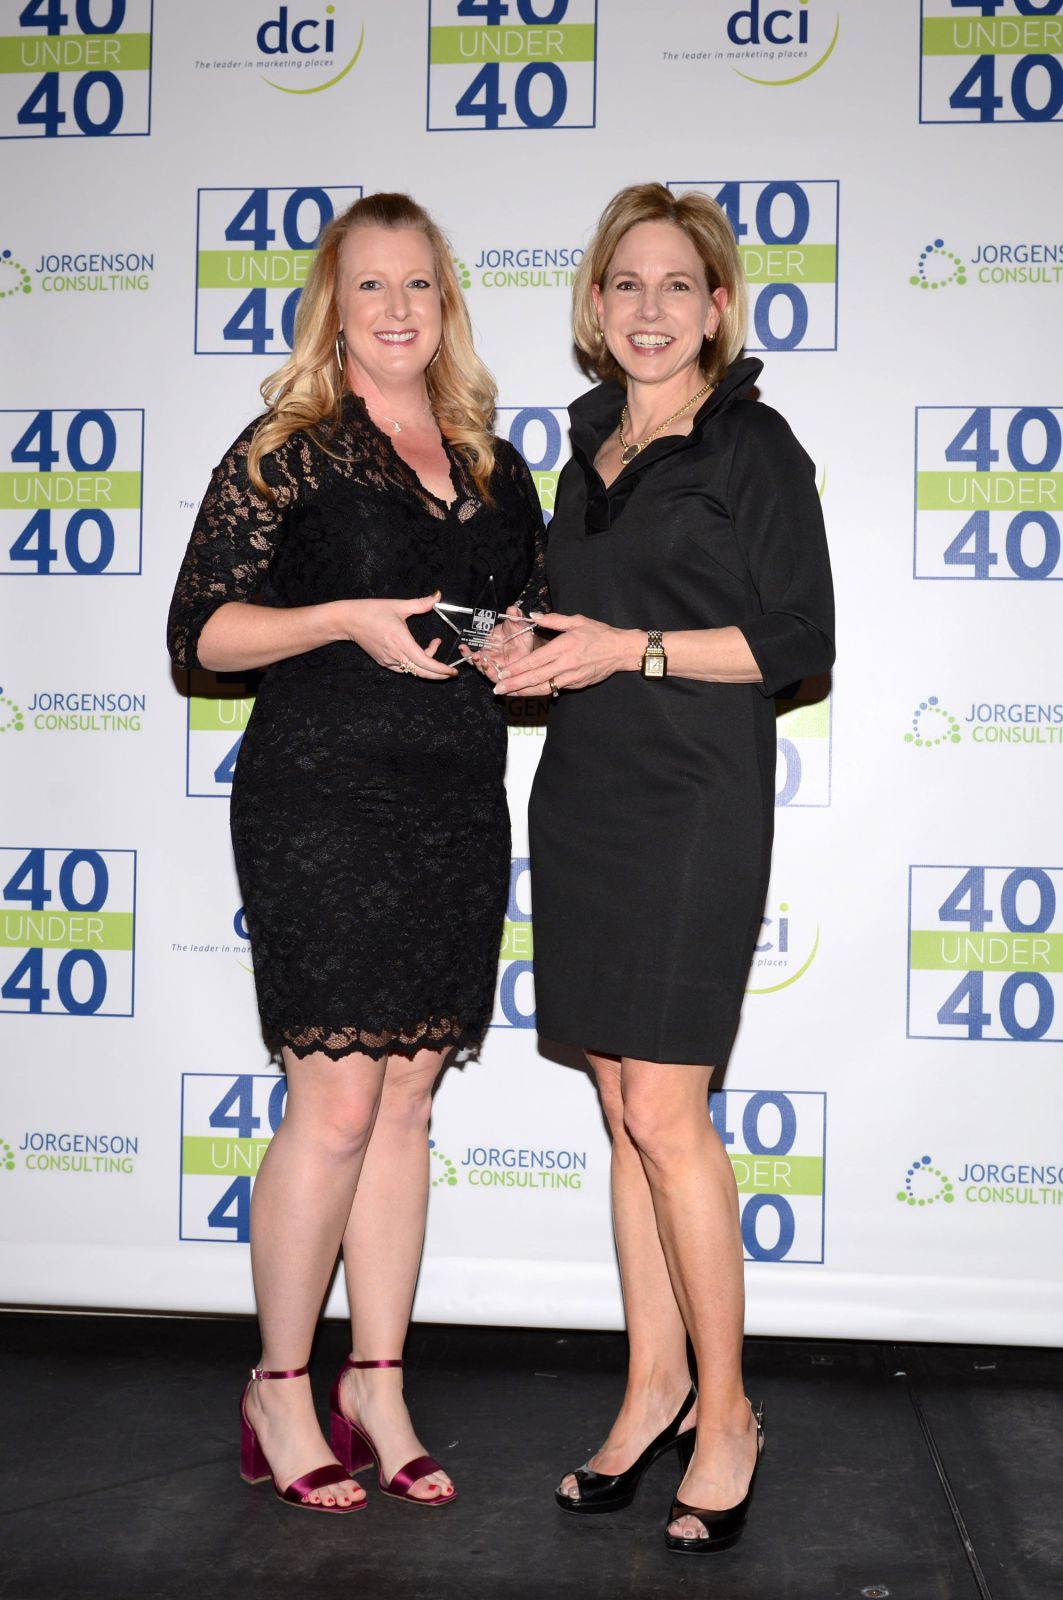 Shannon Landauer wins 40 Under 40 in Economic Development Award Photo